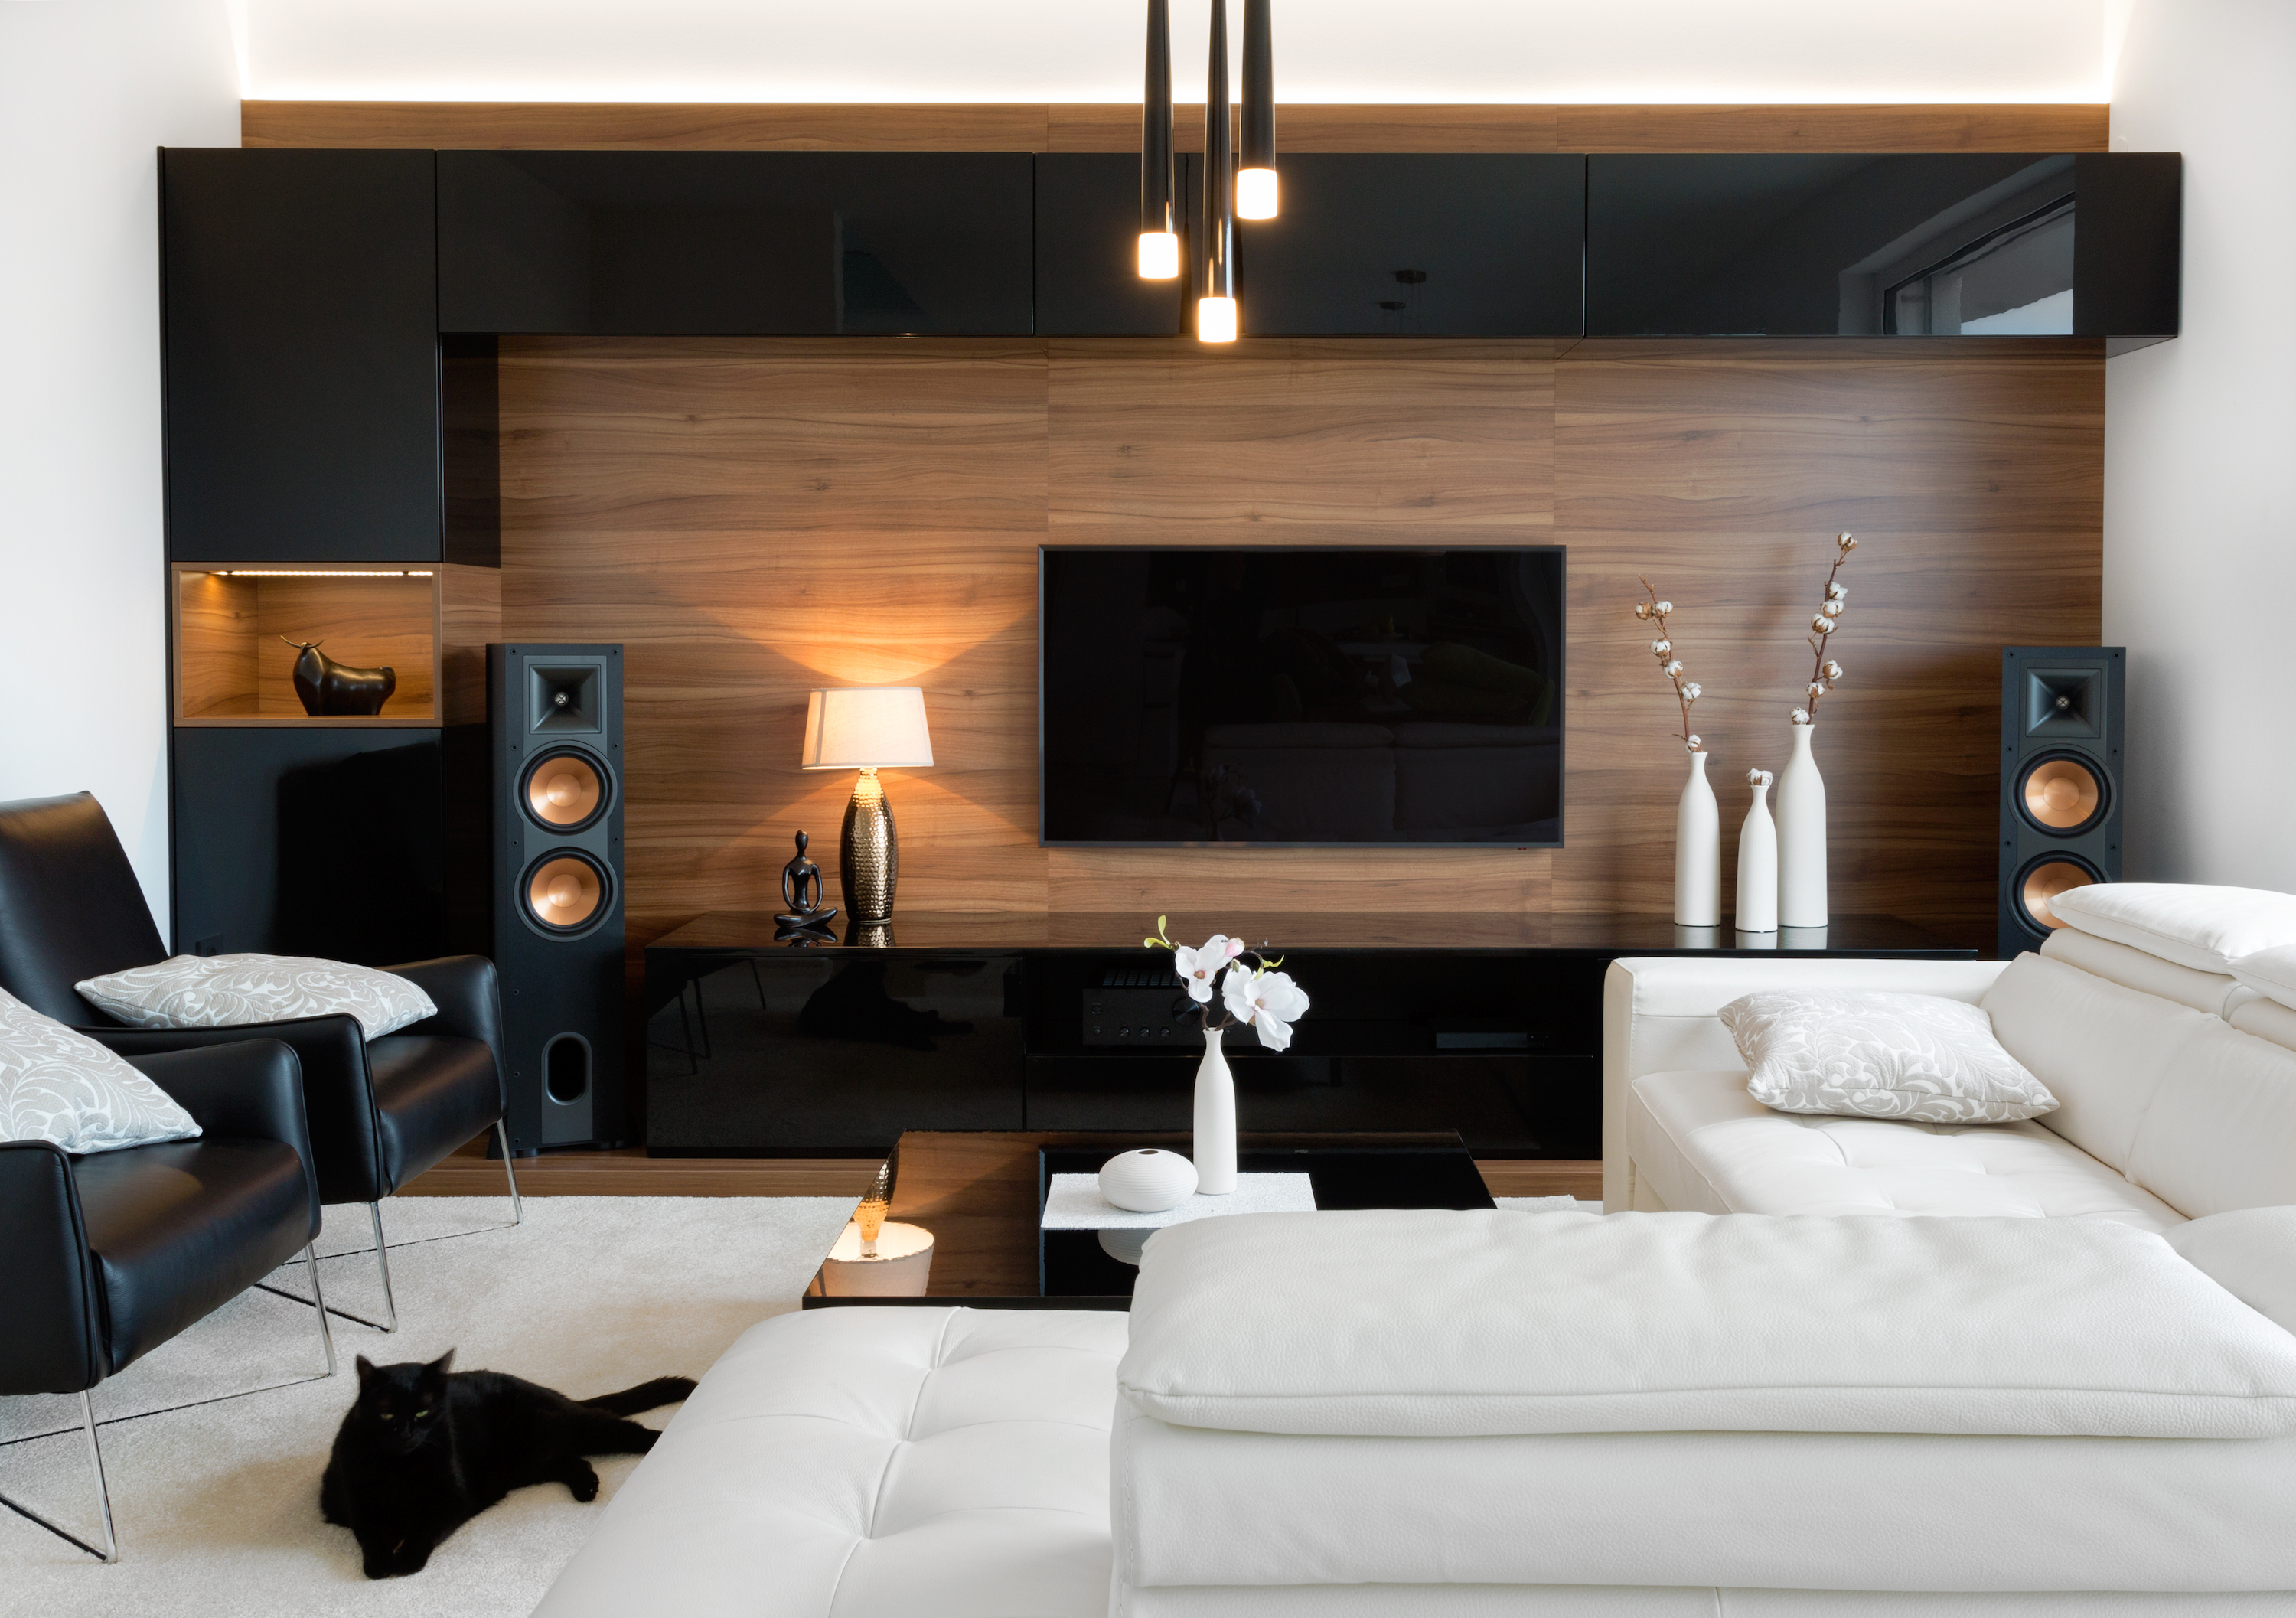 A luxury living room